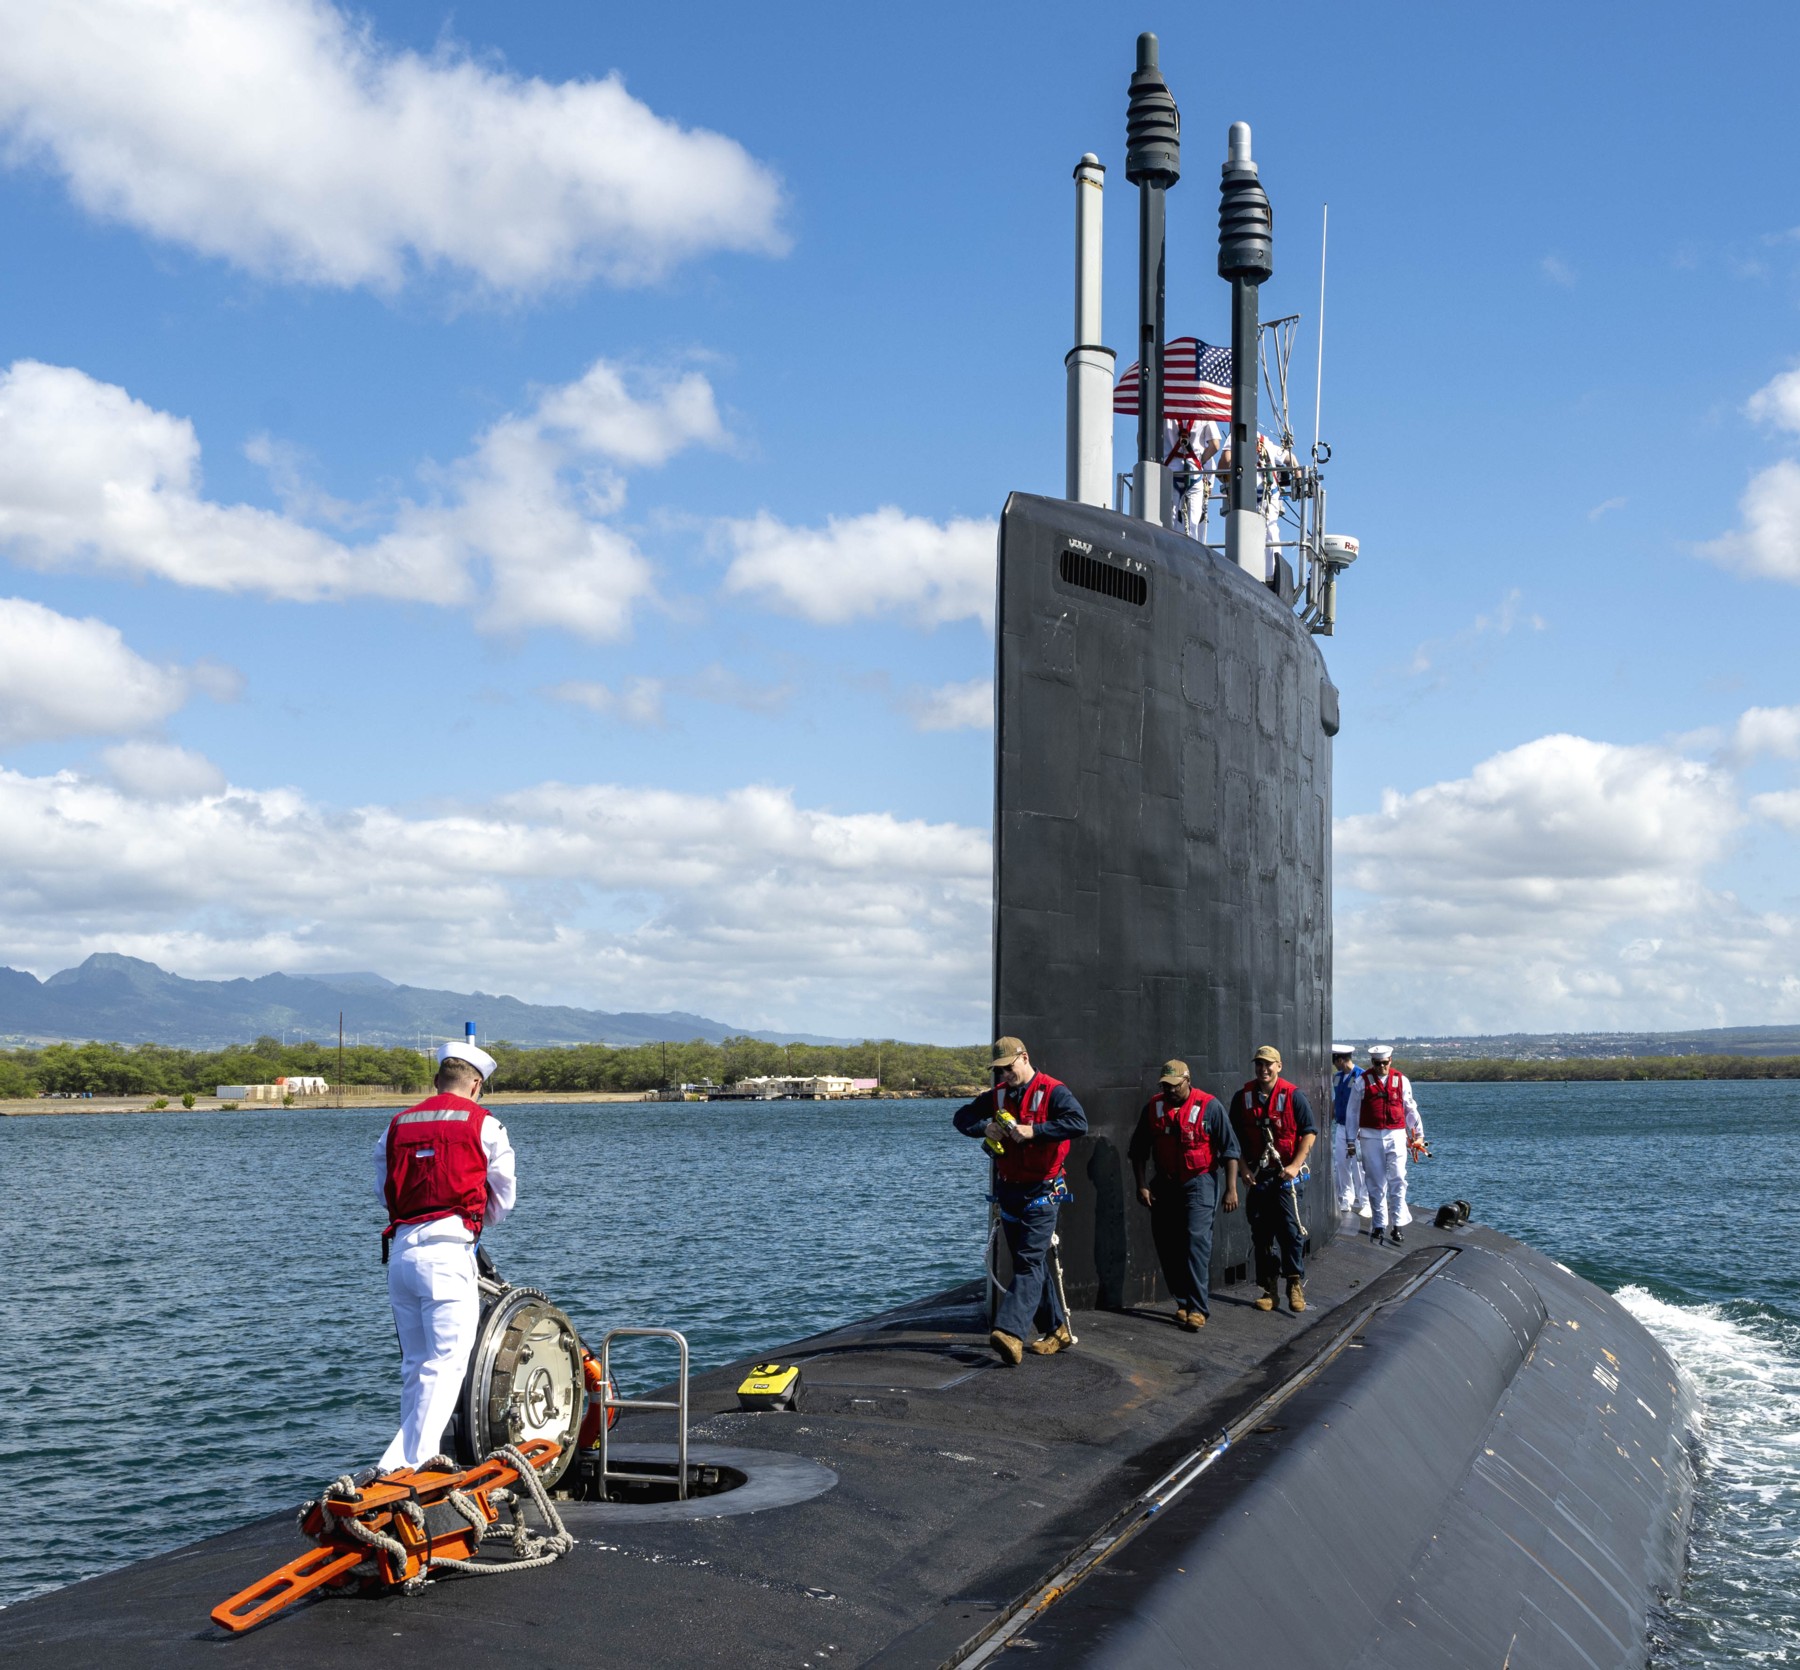 ssn-792 uss vermont virginia class attack submarine us navy pearl harbor hickam hawaii homeport 25